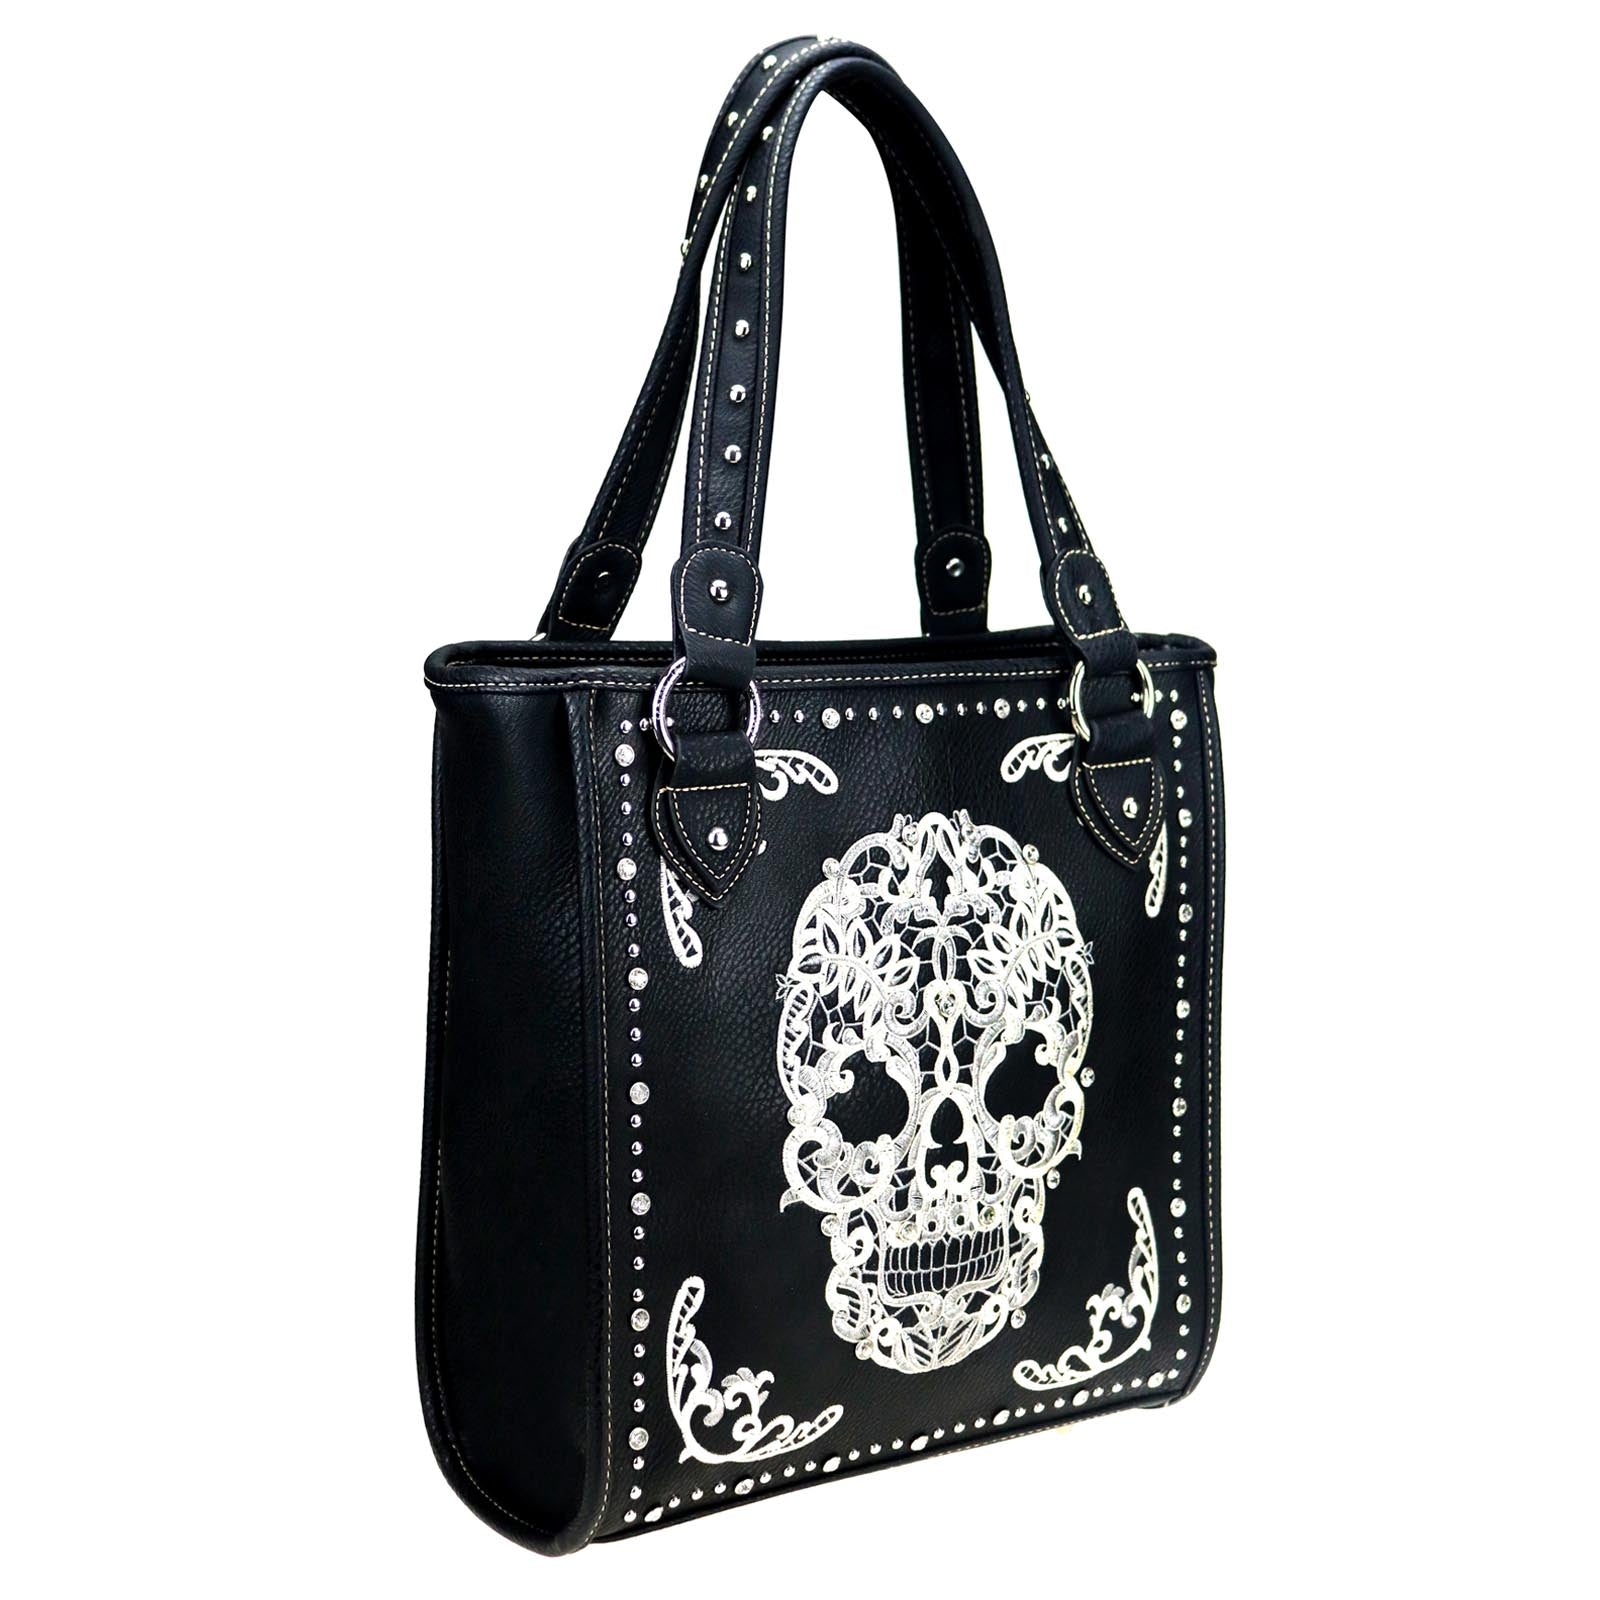 Tote handbag sugar skull black/white